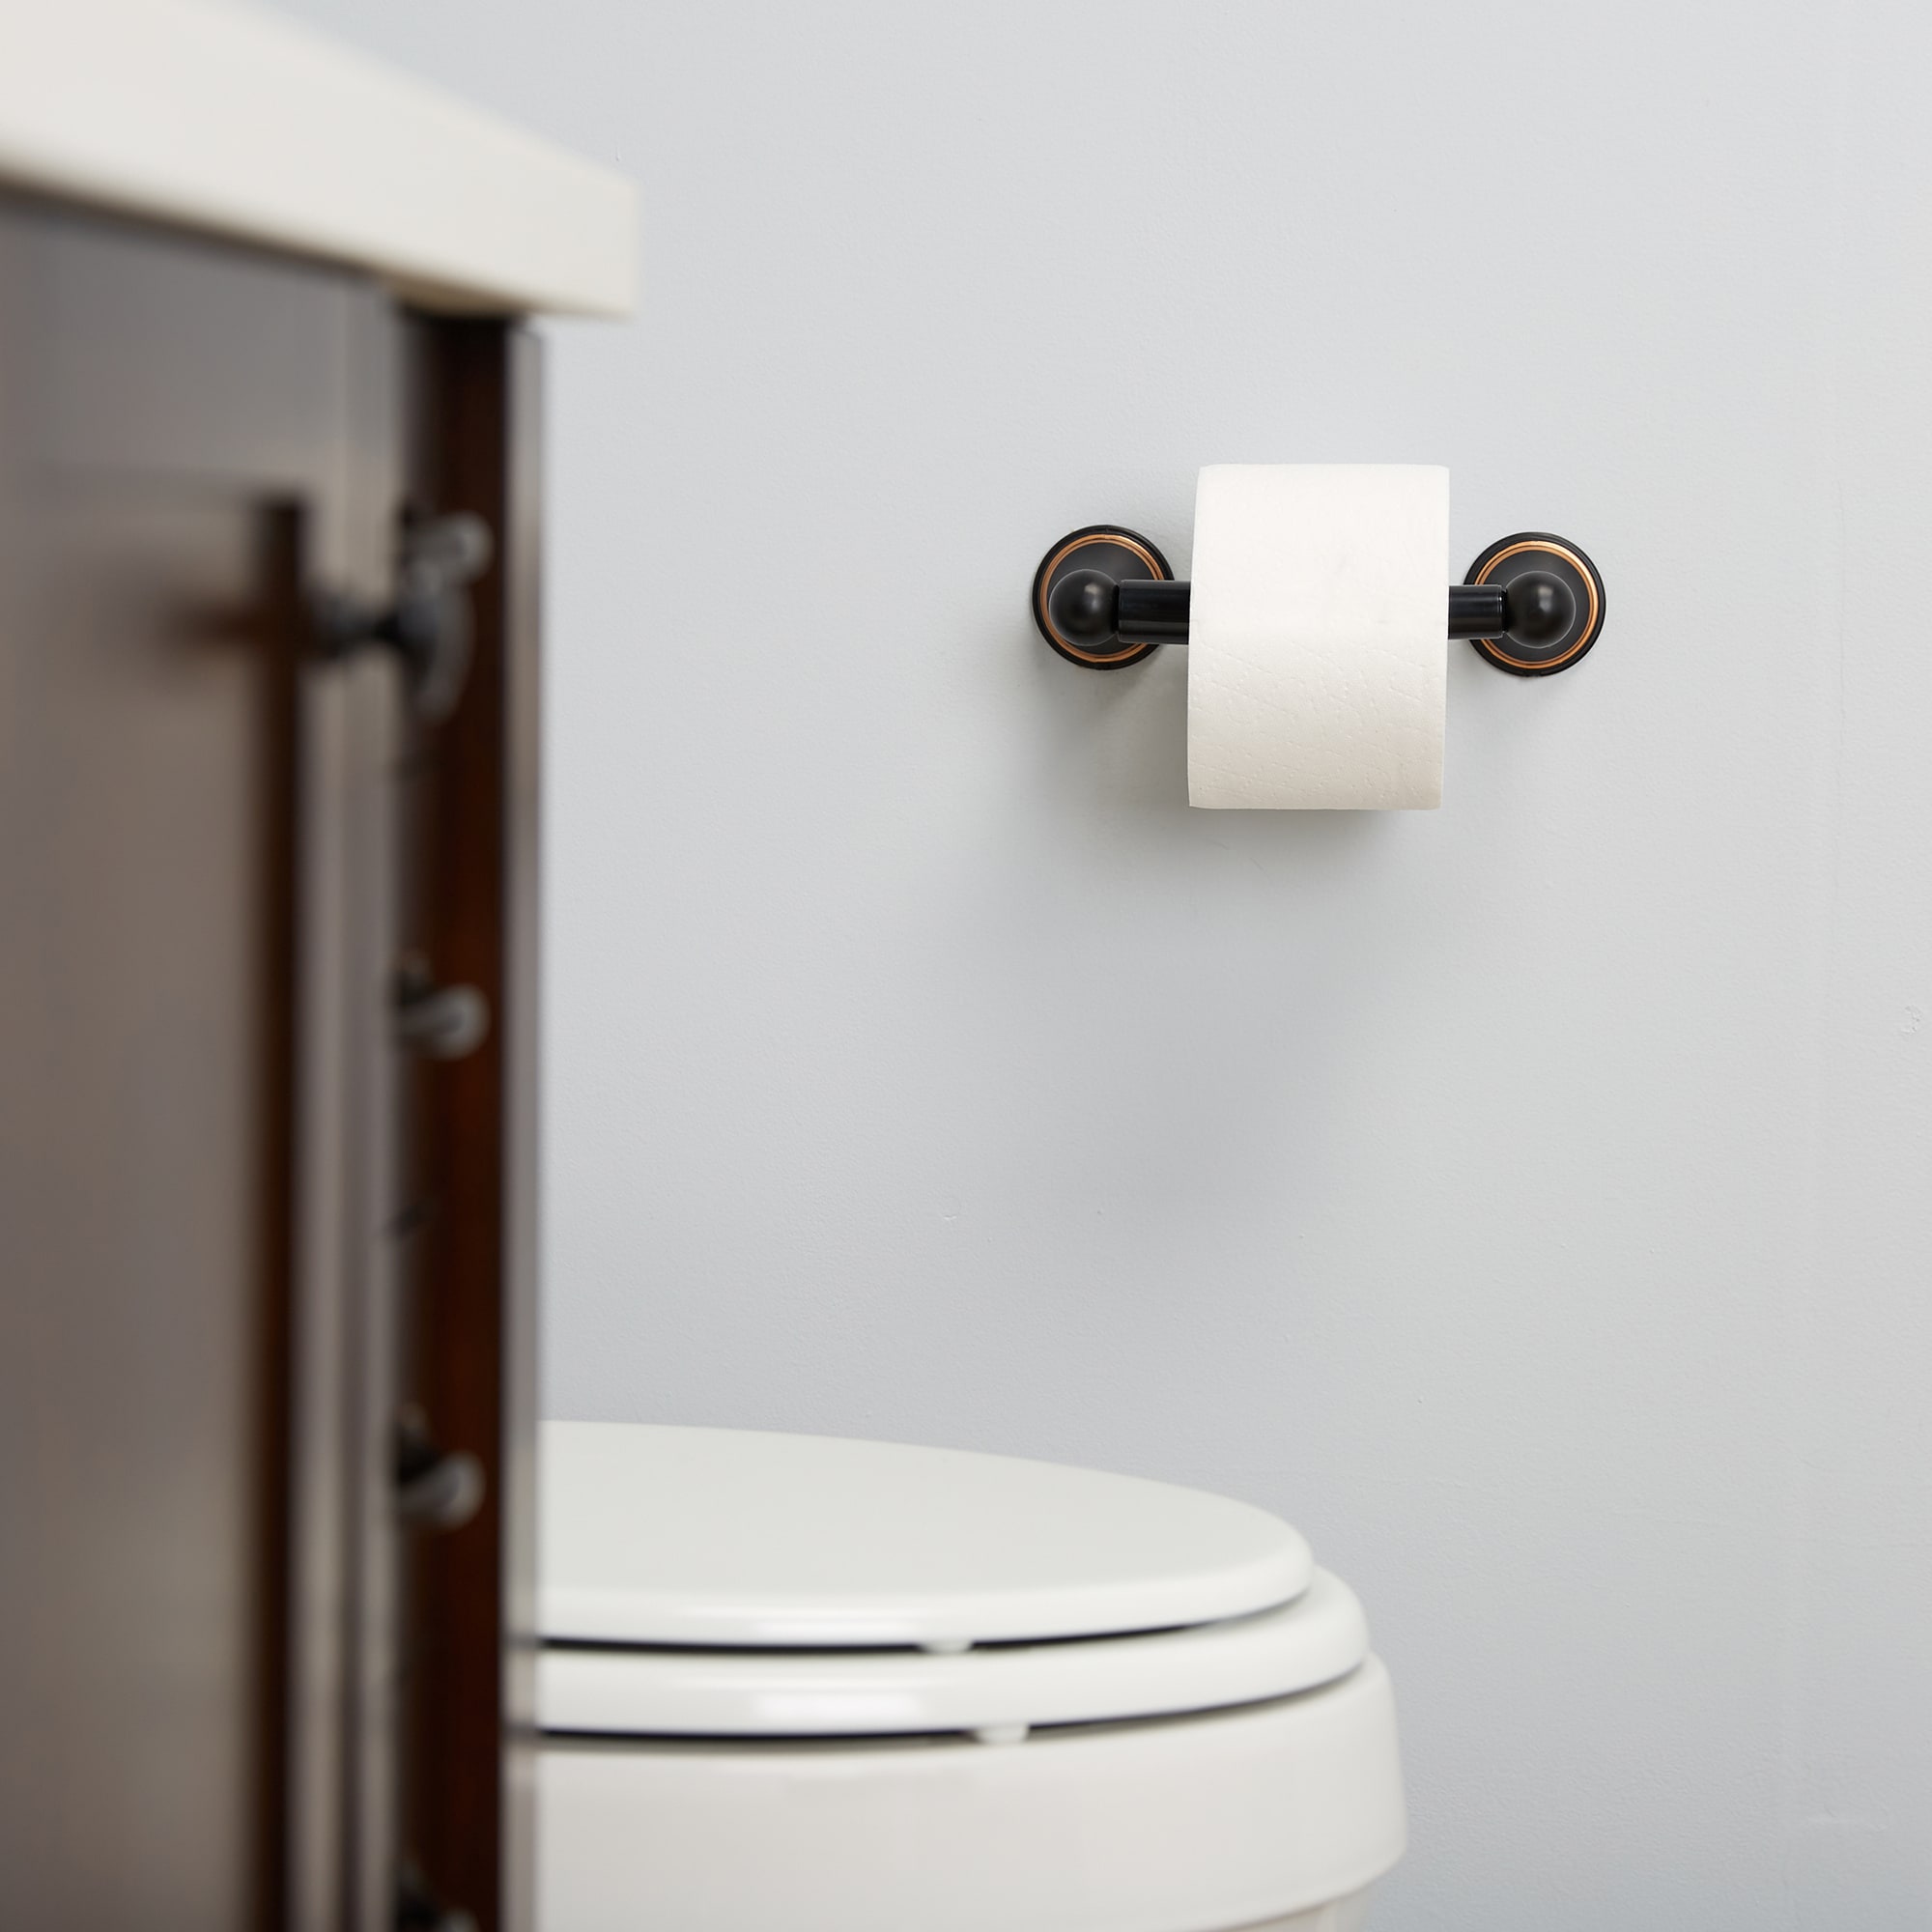 BigBig Home Bronze Toilet Paper Holder, Oil Rubbed Towel Holder Bathroom  Towel Ring Rustic Tissue Roll Holder Farmhouse Paper Towel Holder Wall Mount